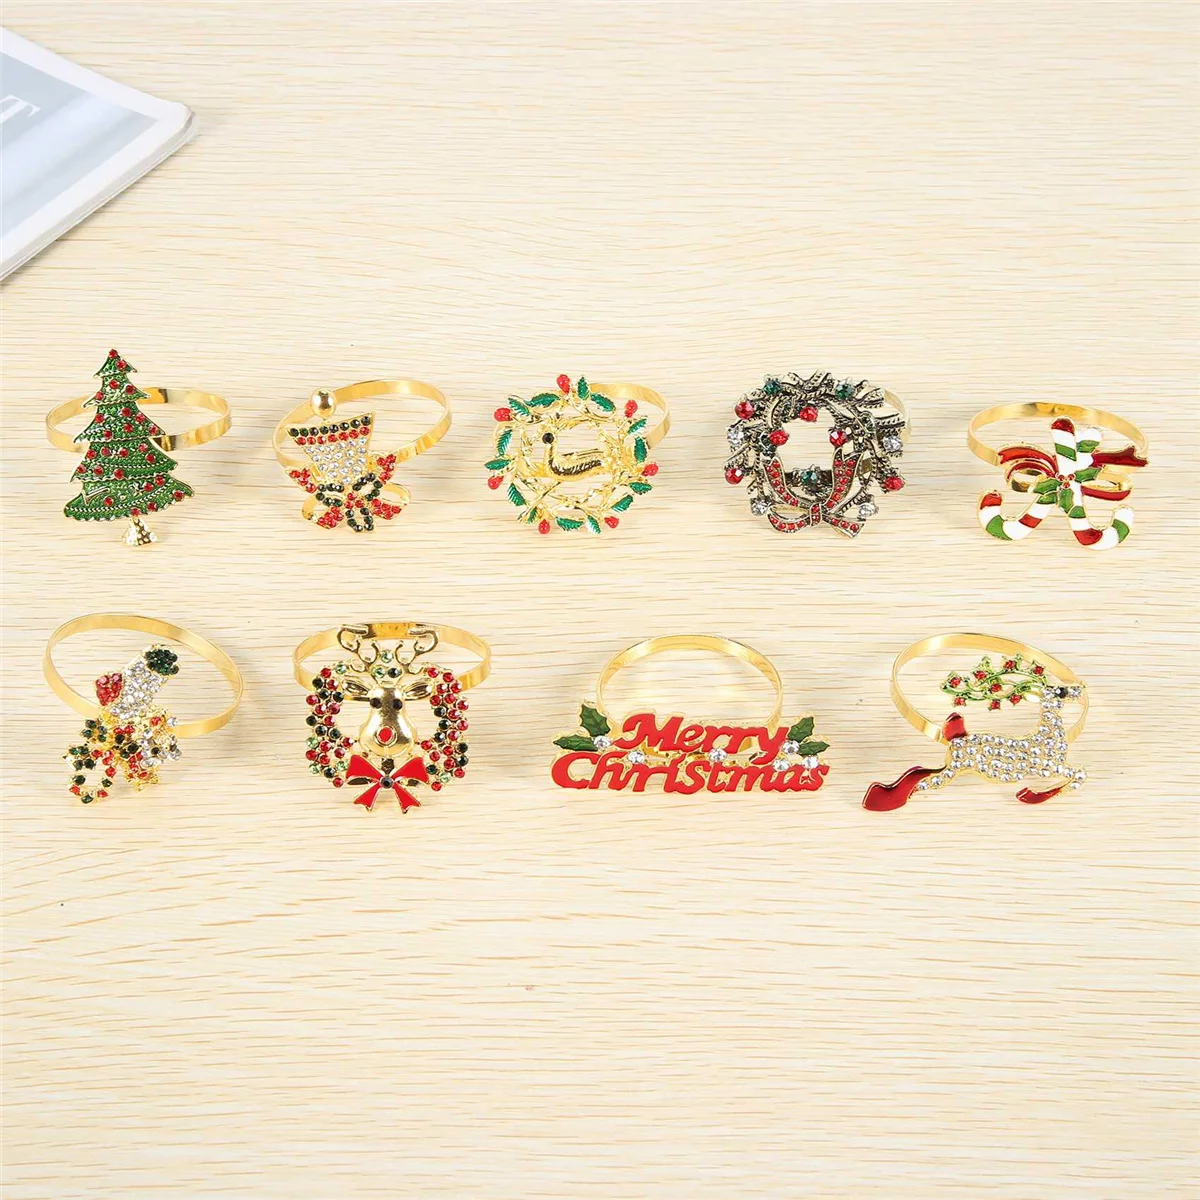 Набор рождественских колец для салфеток из 9 предметов, металлический рождественский держатель для салфеток, декор для колец для салфеток